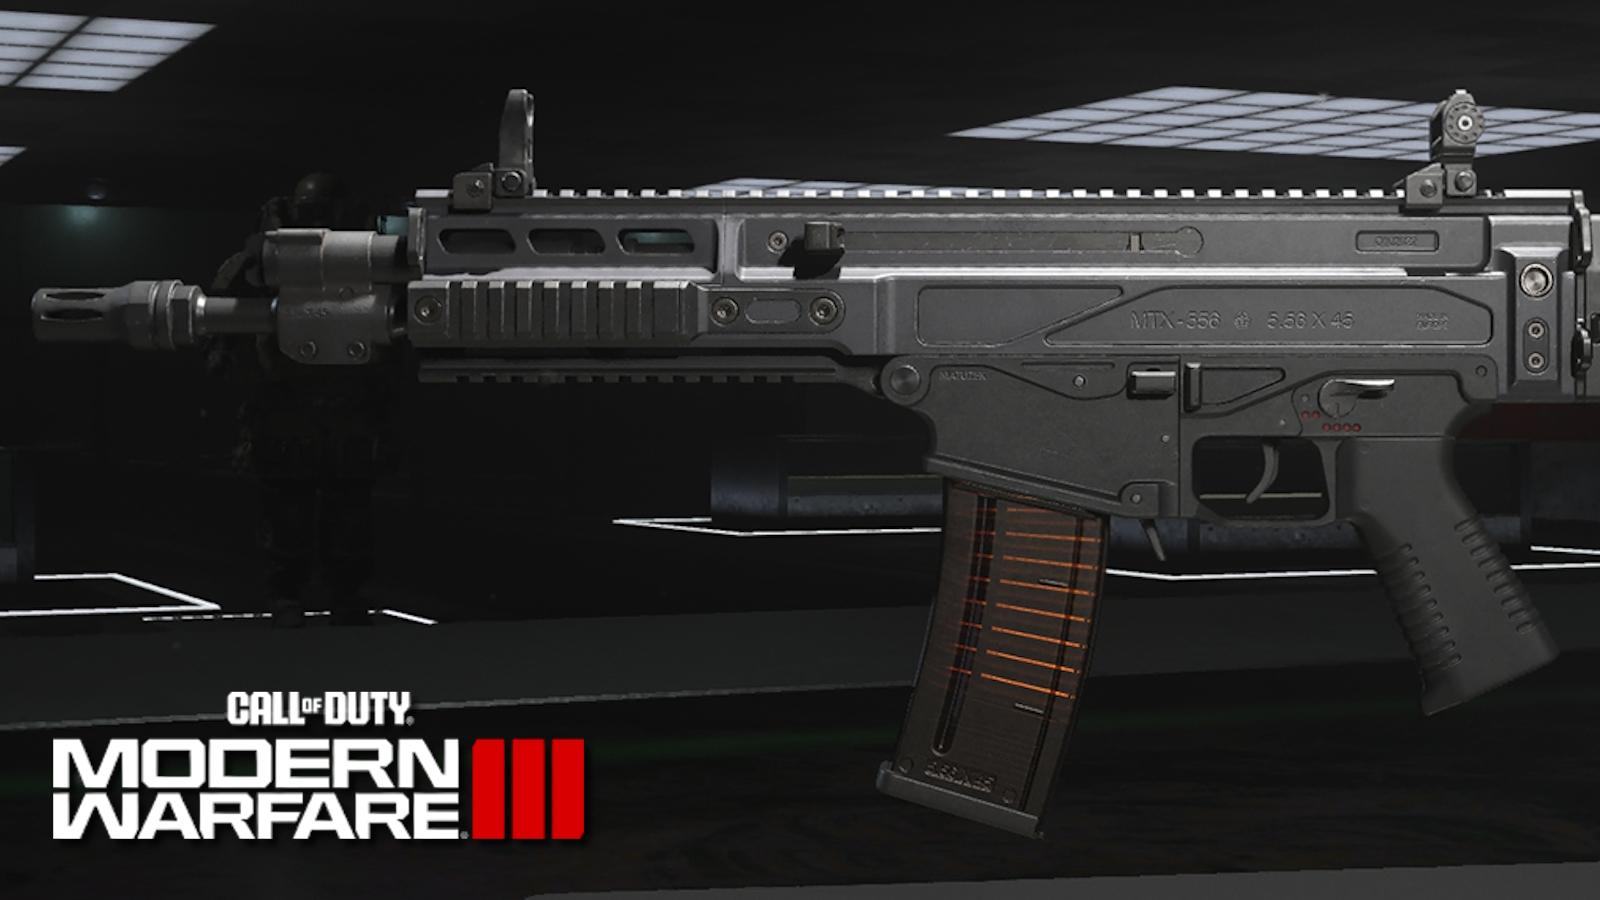 MTZ-556 assault rifle in Modern Warfare 3.